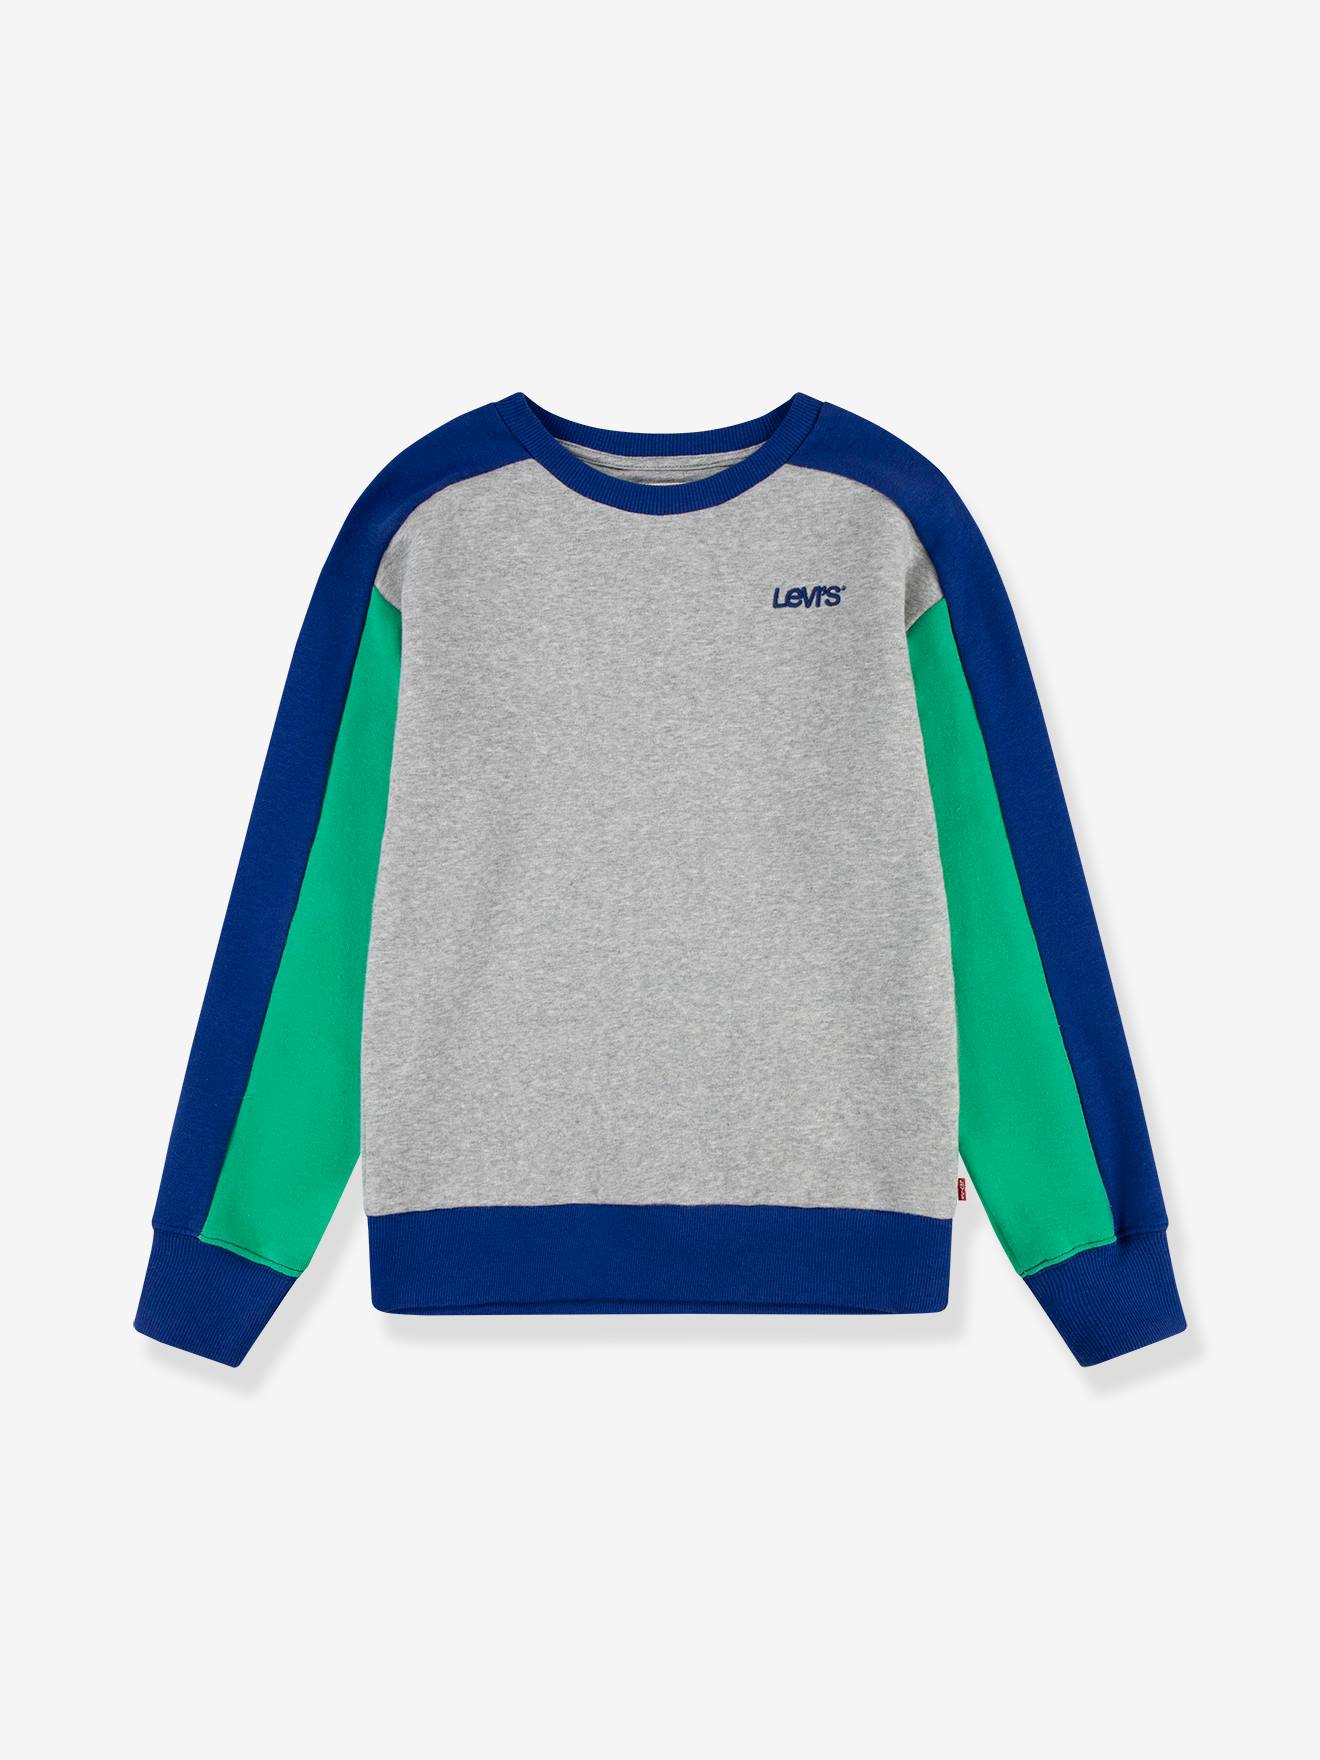 Colourblock Sweatshirt with Logo by Levi’s(r) marl grey